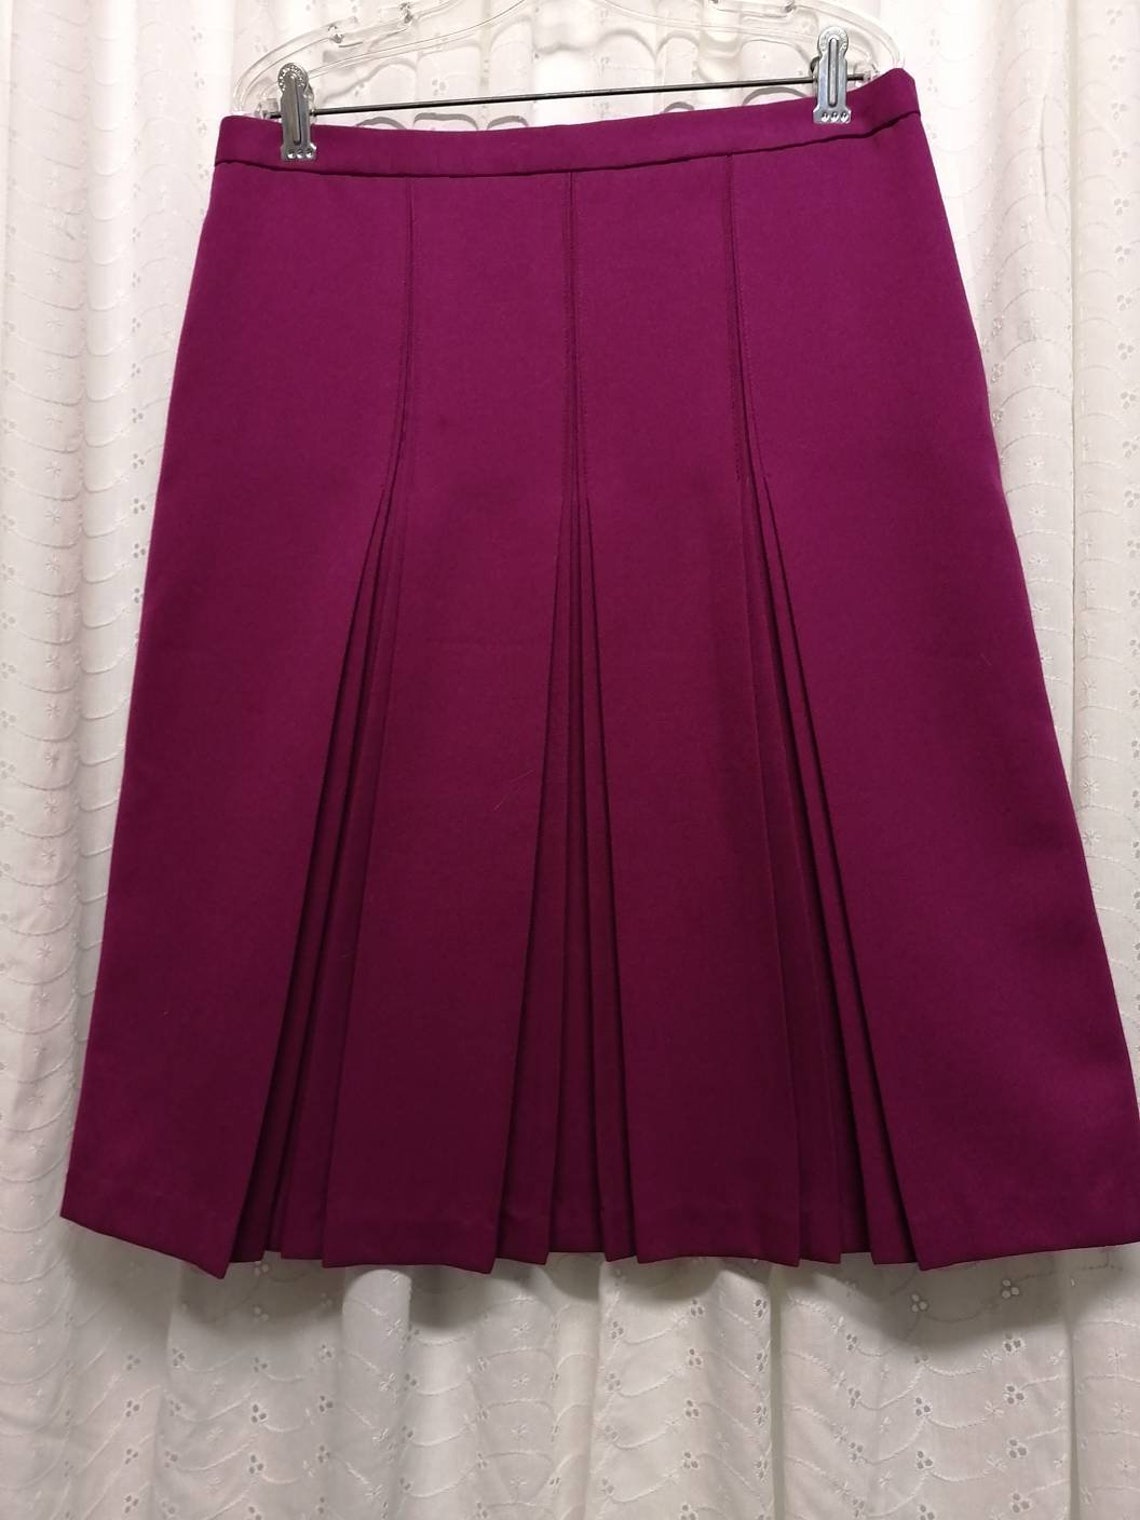 Fuchsia Pleated Kick Skirt Retro Fuchsia Skirt for Women Box | Etsy